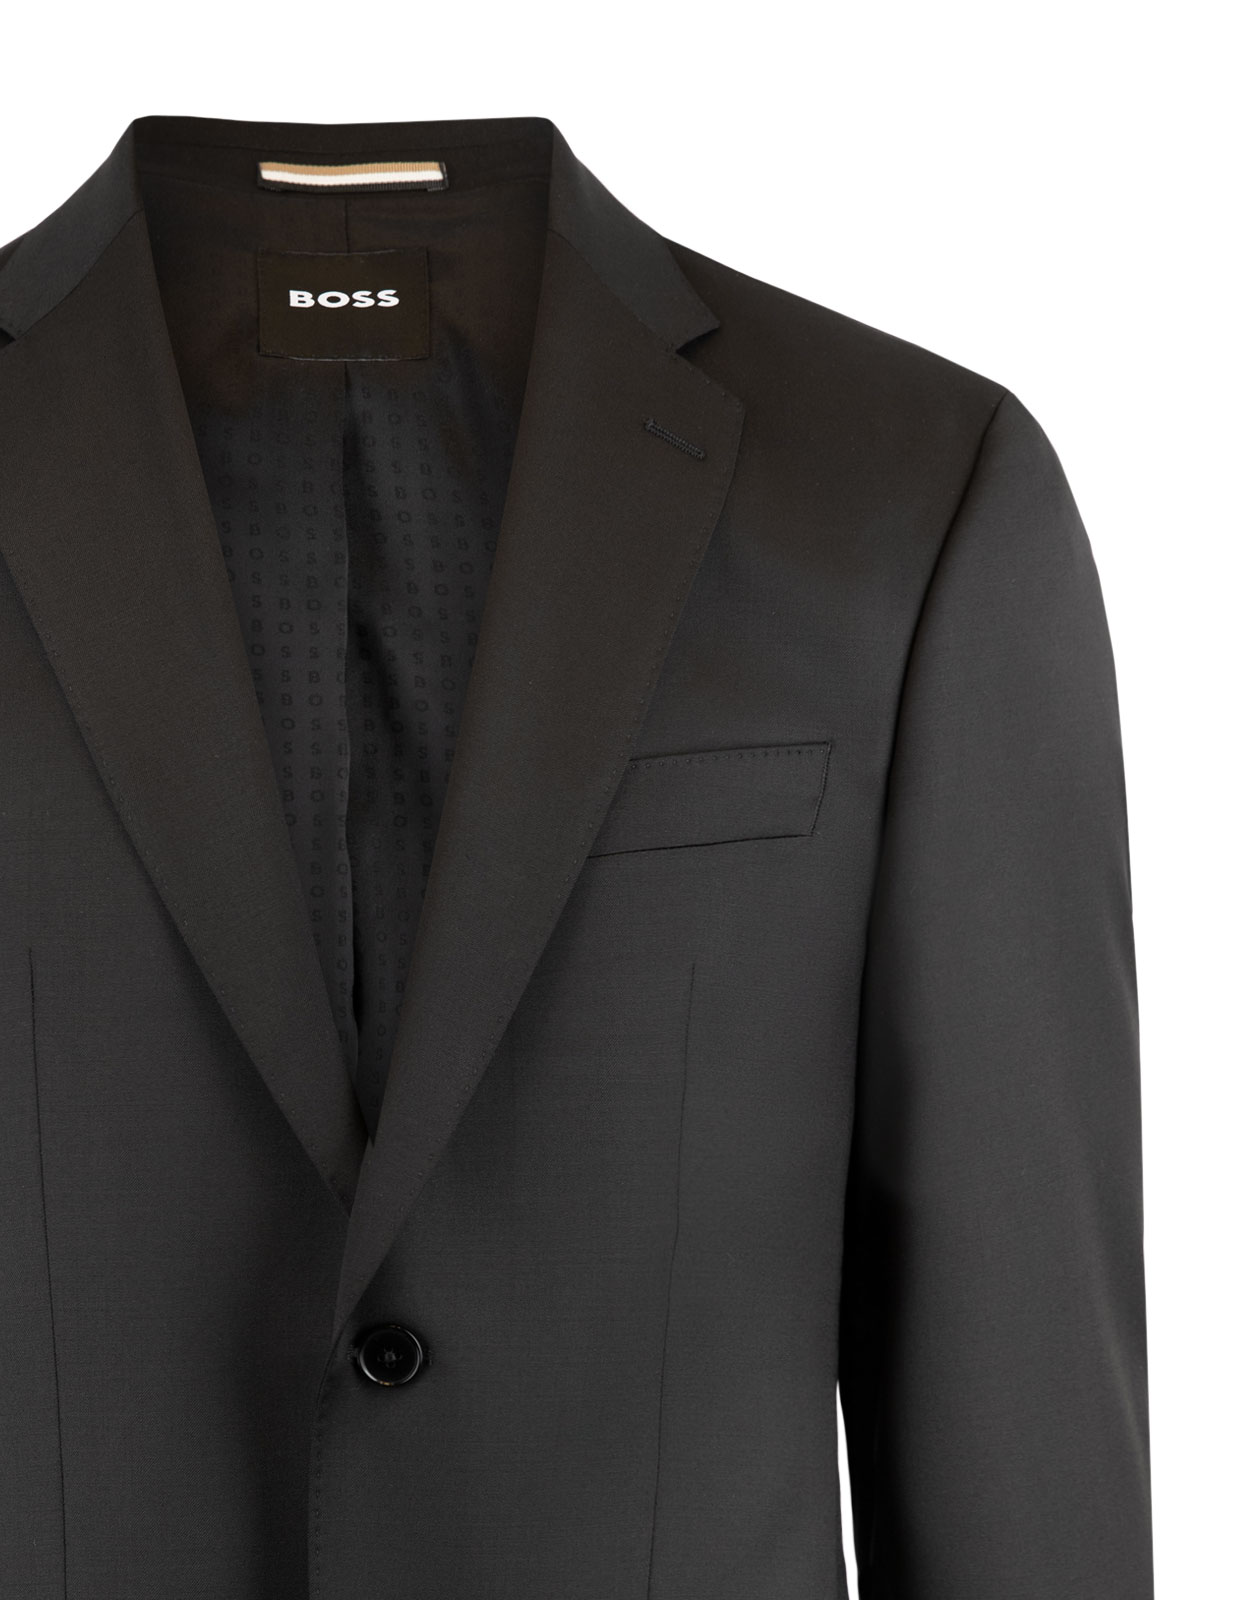 H-Jeckson Suit Jacket Regular Fit Mix & Match Black Stl 108